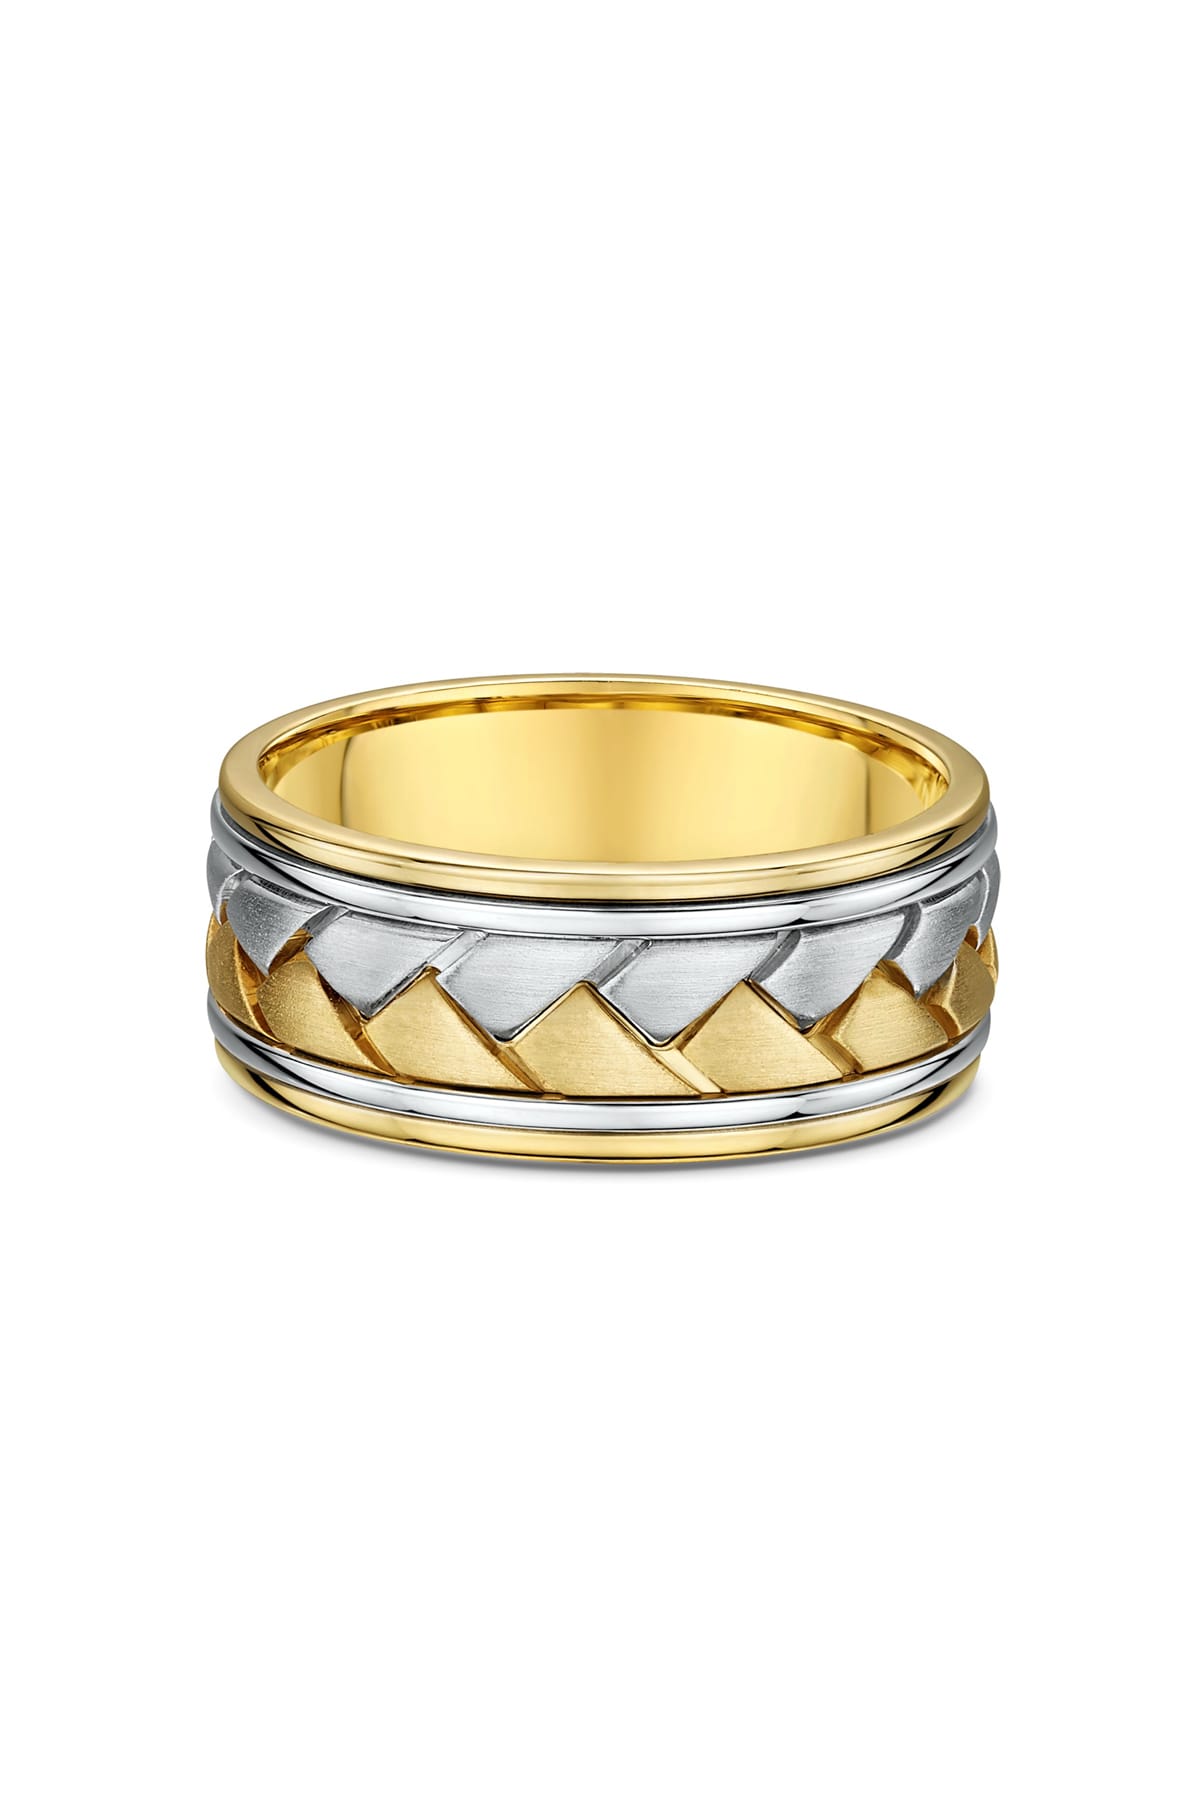 Men's Wedding Ring available at LeGassick Diamonds and Jewellery Gold Coast, Australia.